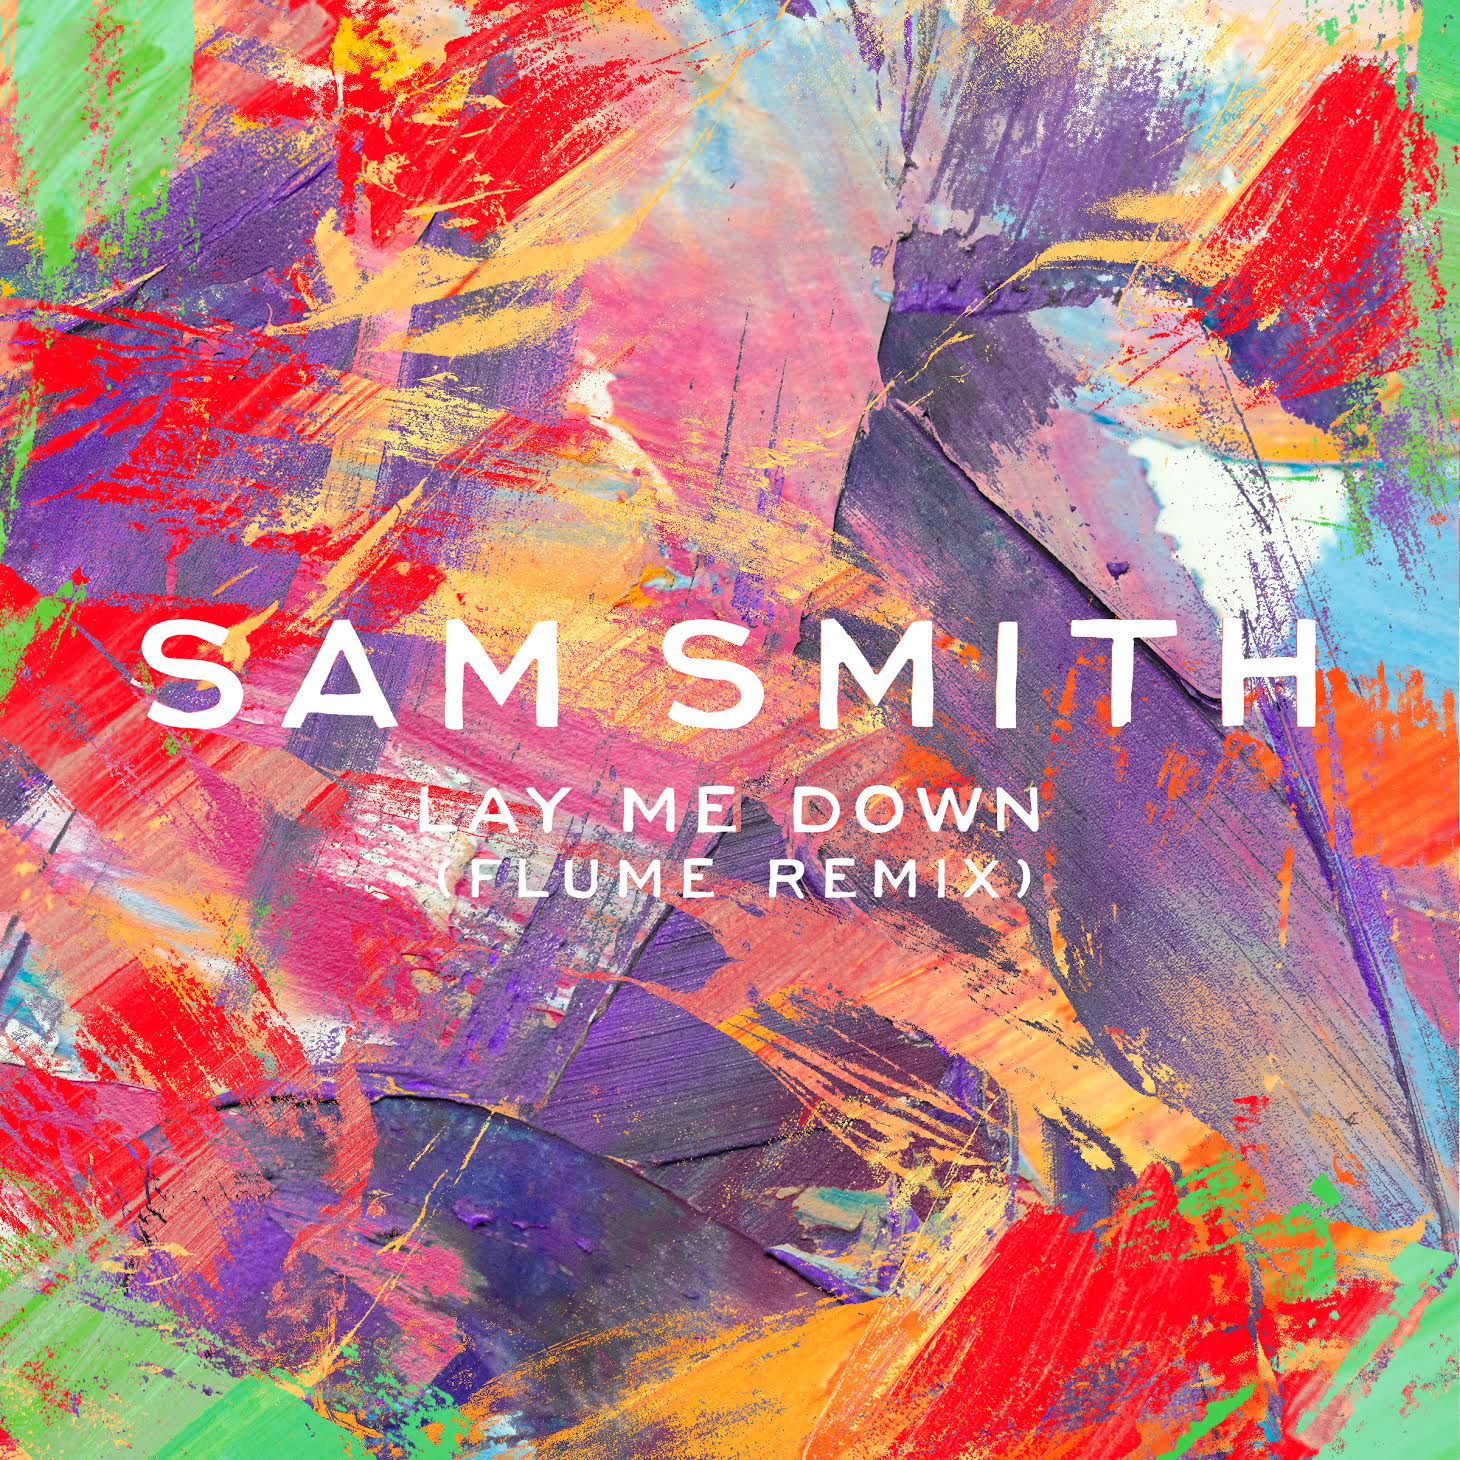 डाउनलोड करा Sam Smith - Lay Me Down (Flume Remix)